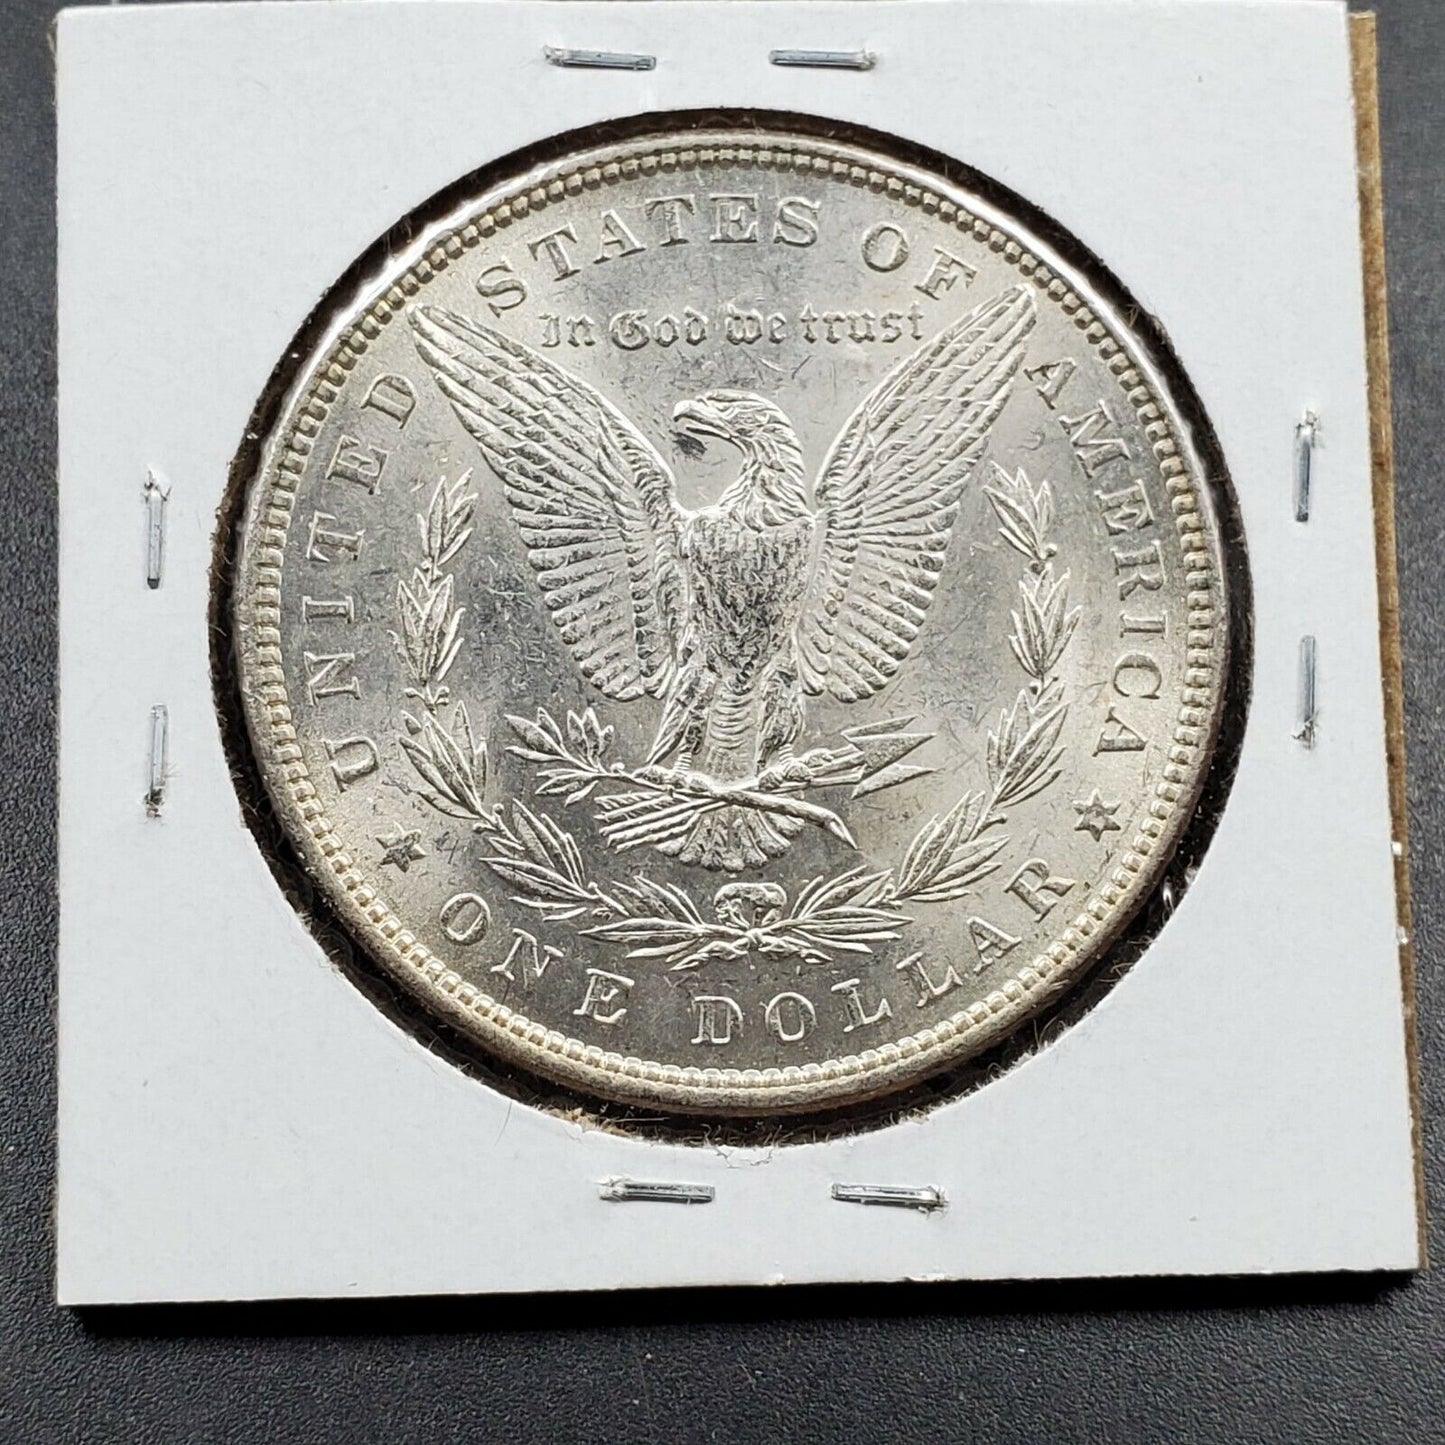 1882 P $1 Morgan Silver Eagle Dollar Coin Average BU Uncirculated Some Toning